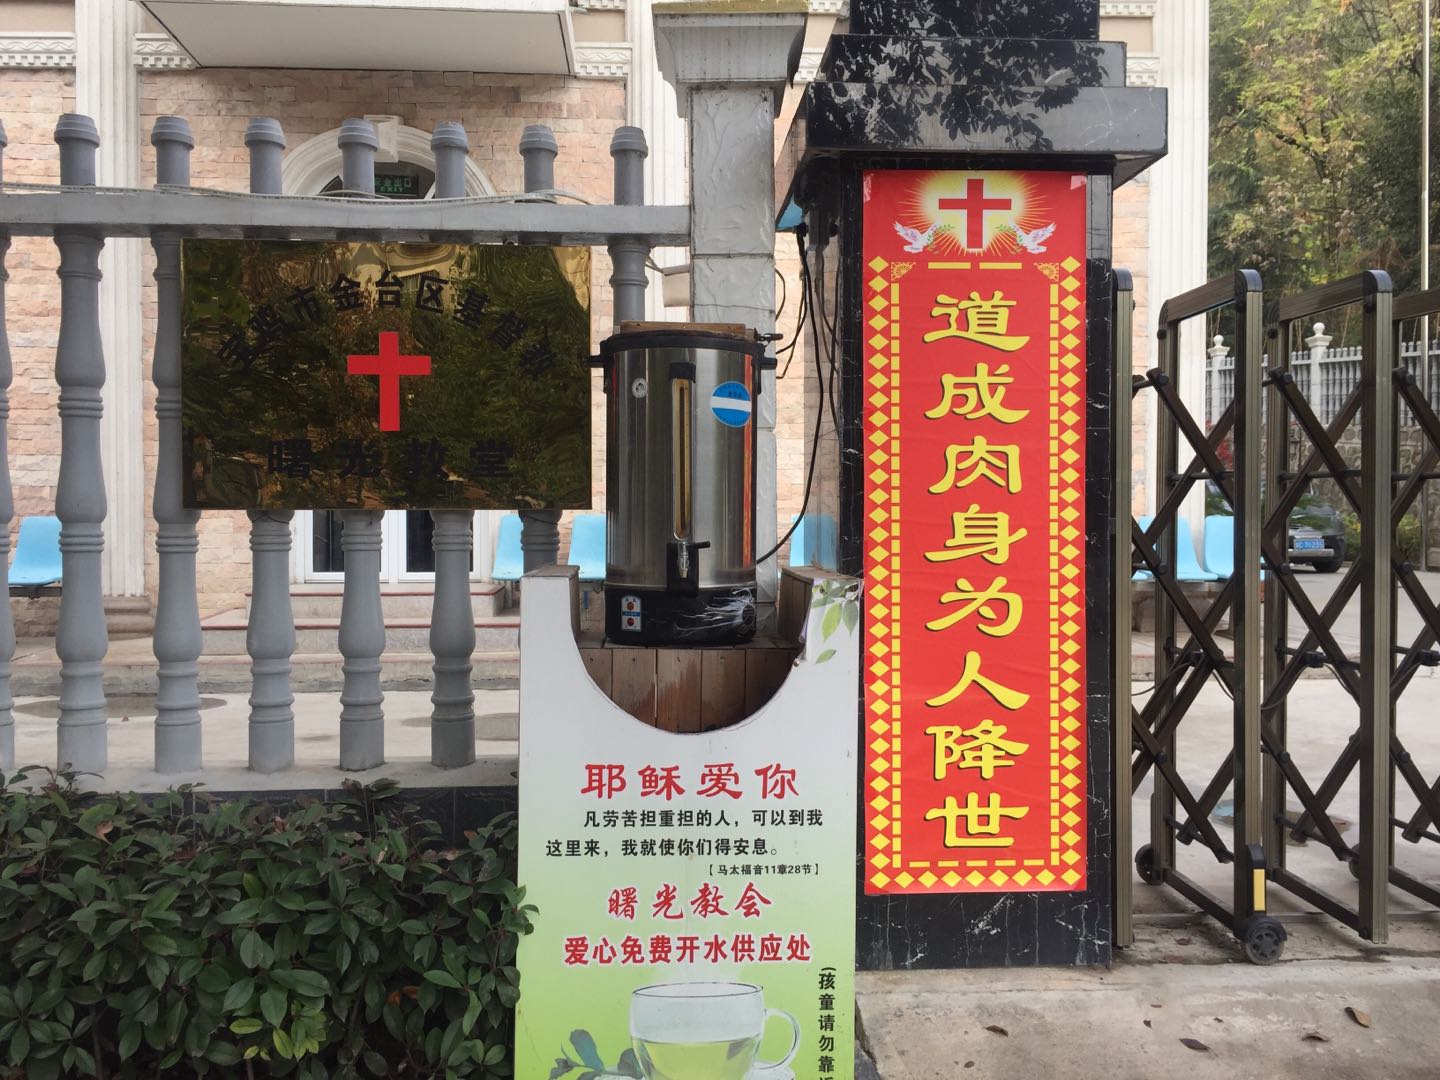 Shuguang Church offers hot water to pedestrians.